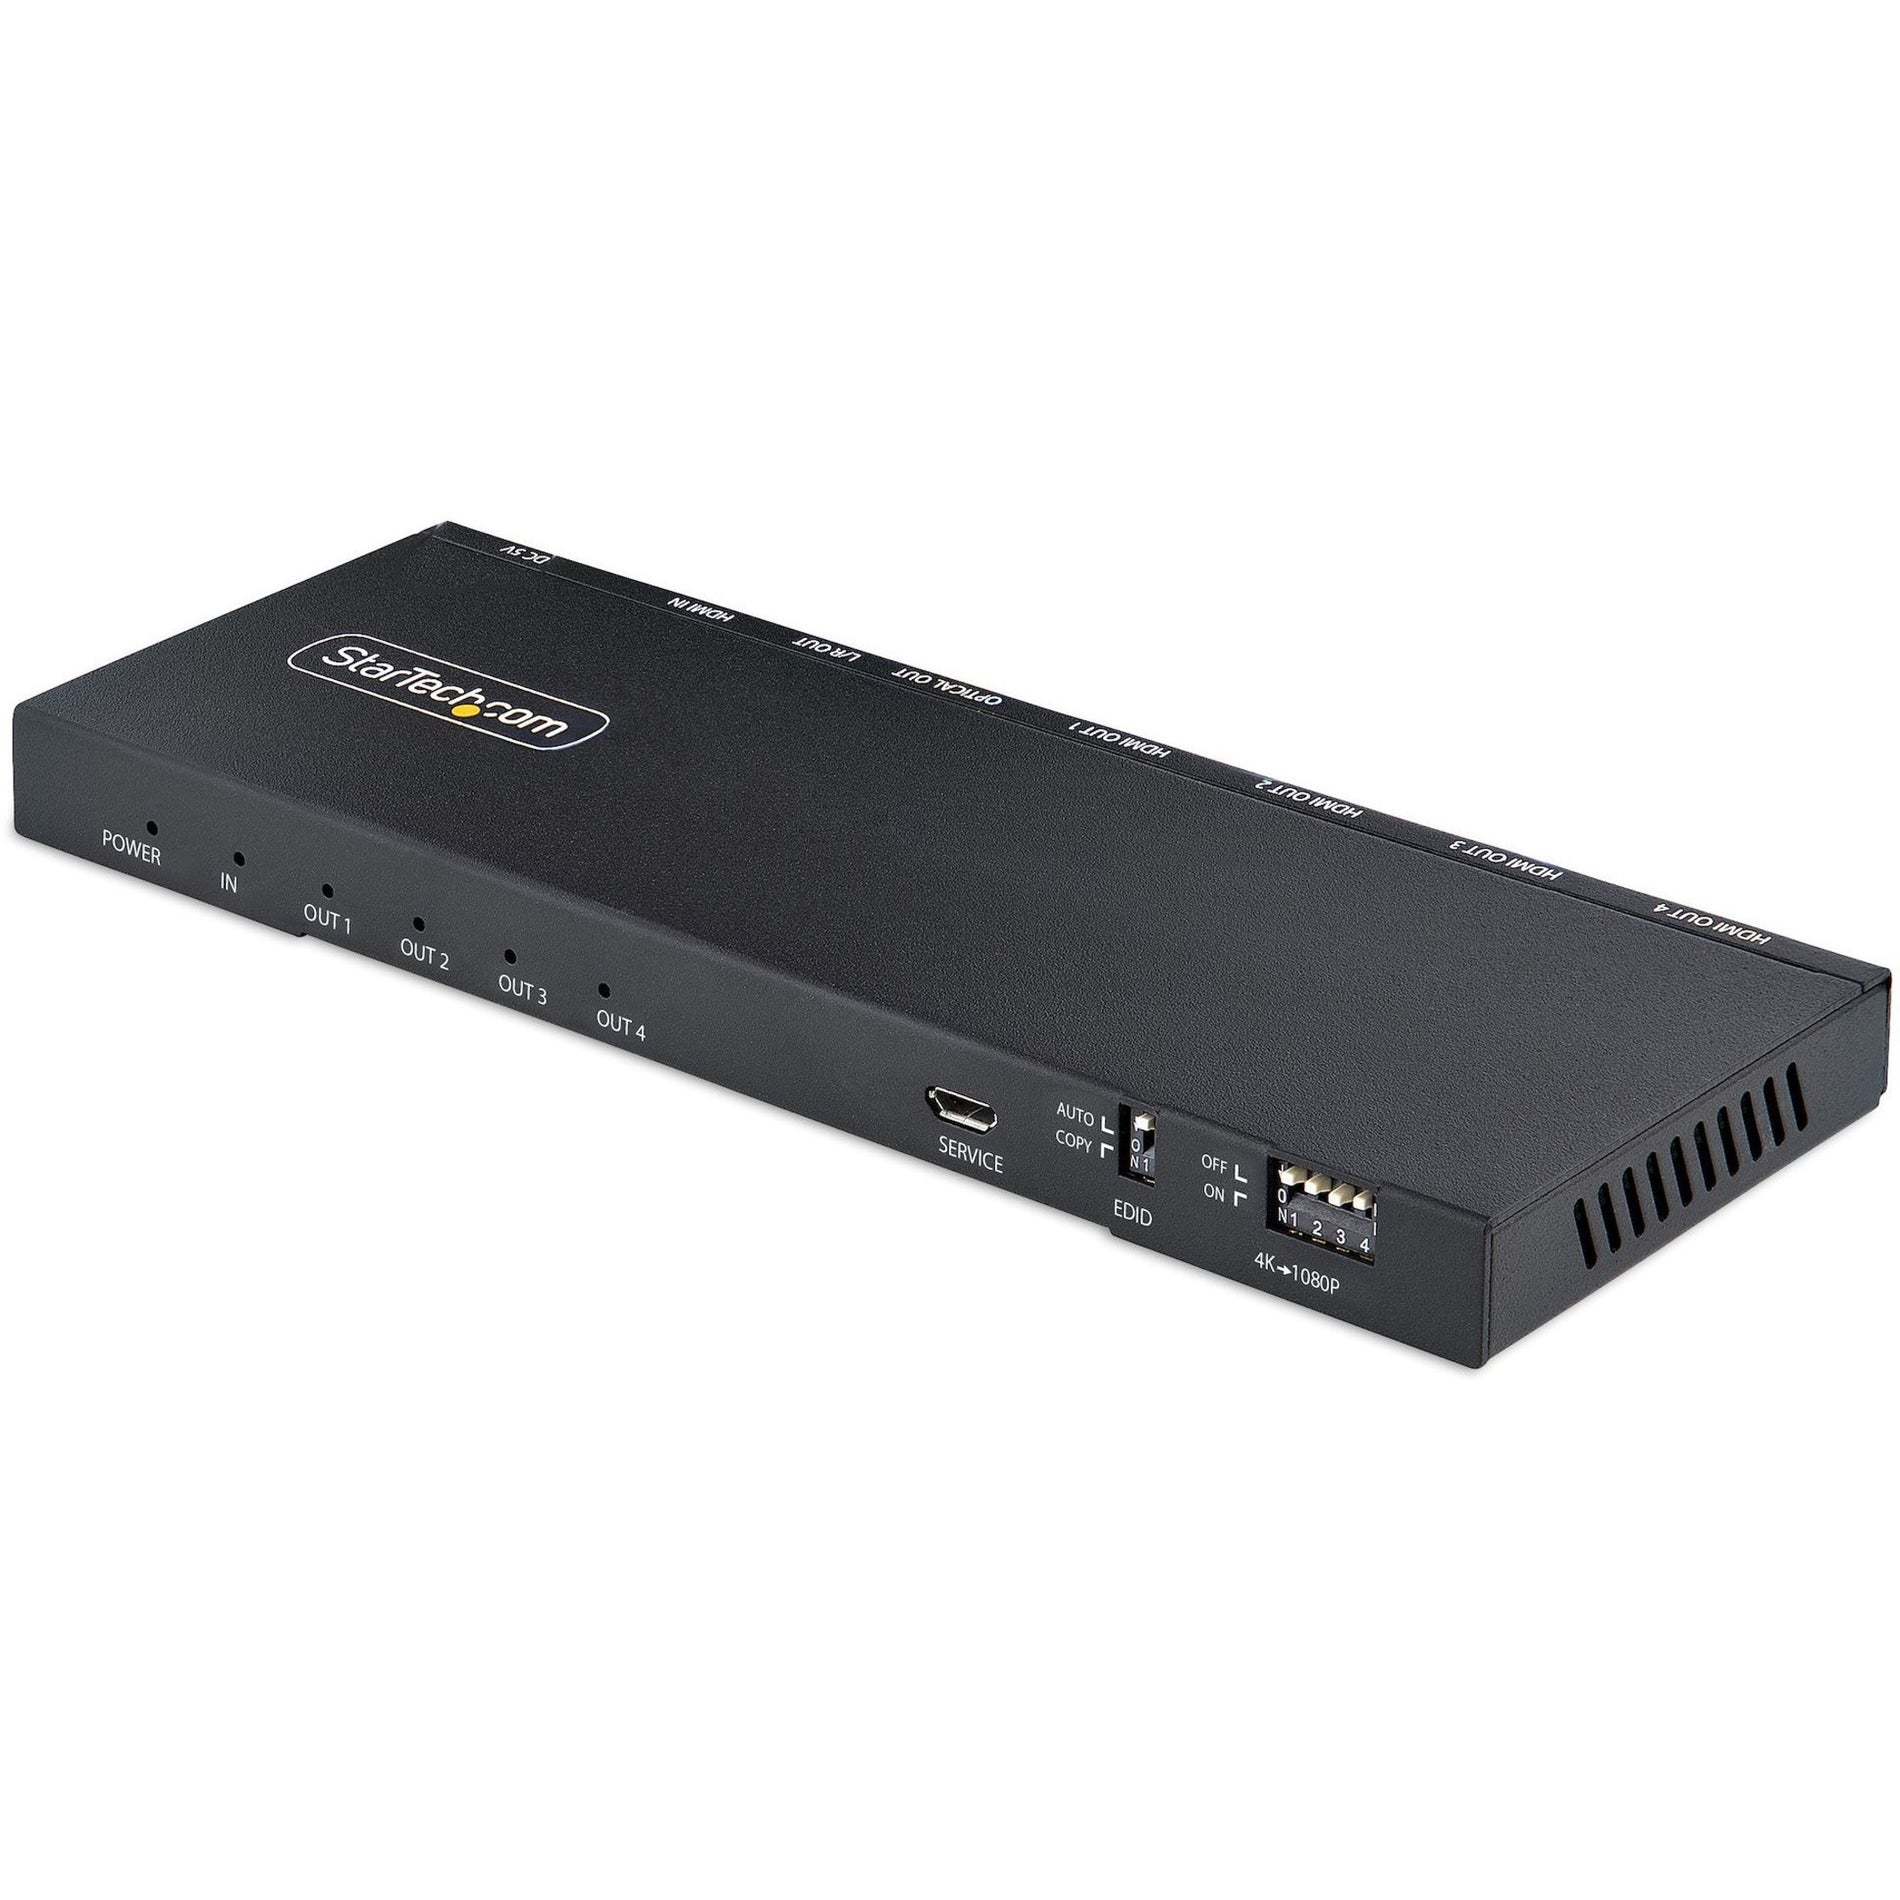 StarTech.com HDMI-SPLITTER-44K60S 4-port HDMI Video Splitter, 3840x2160 Resolution, 2 Year Warranty, USB Powered